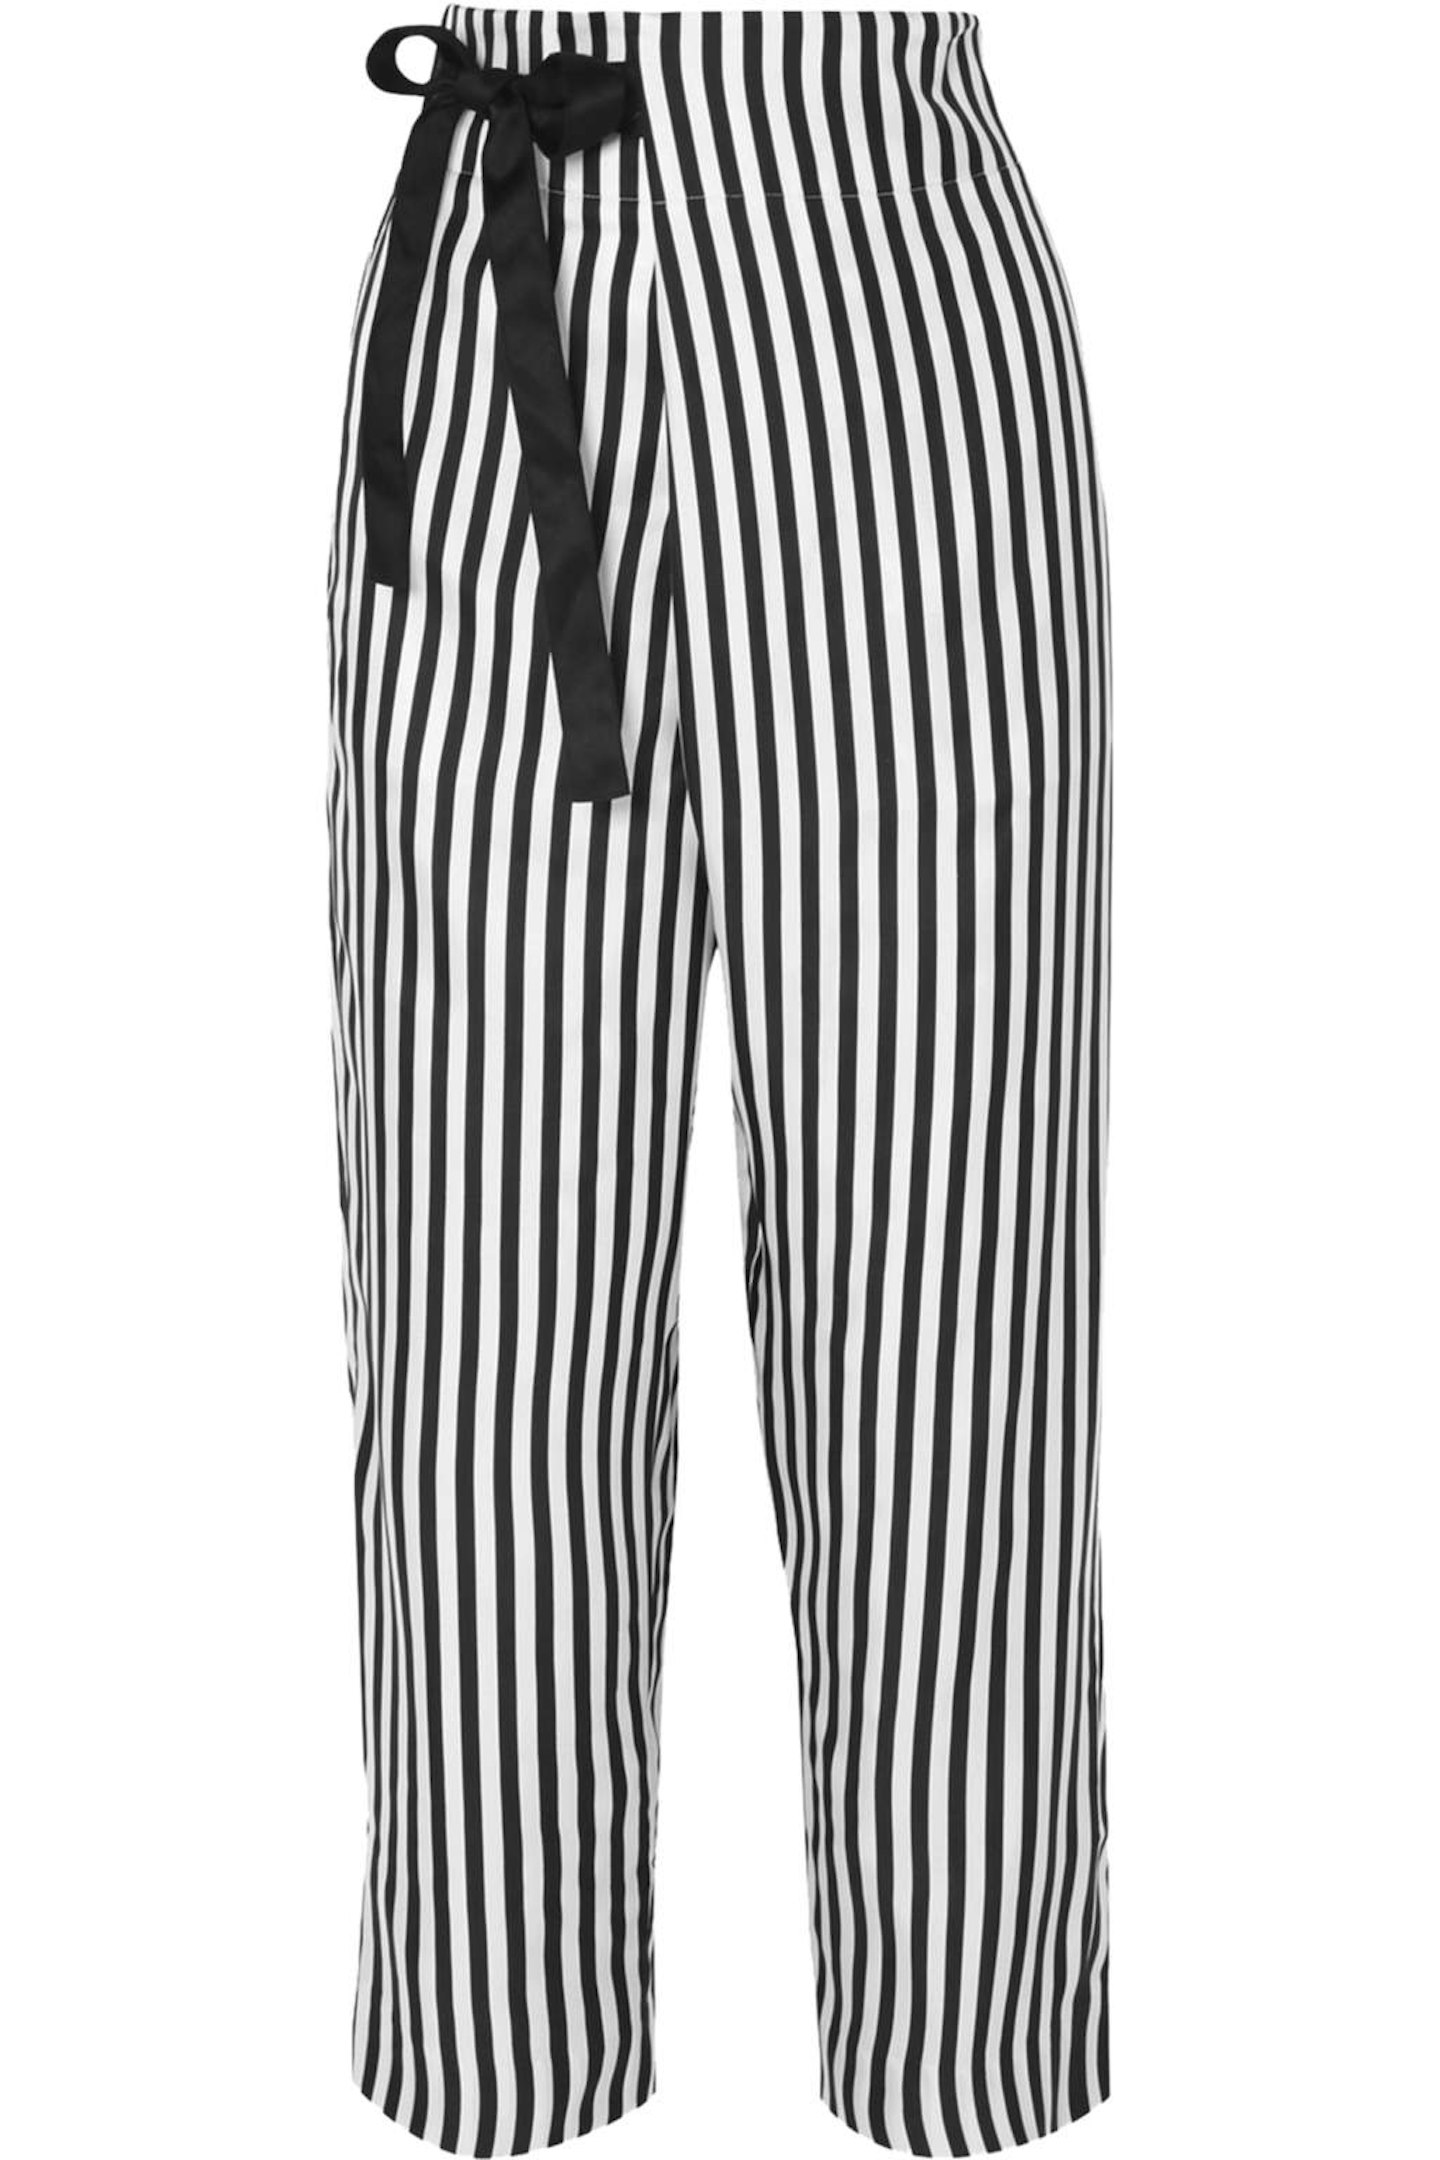 j-crew-striped-trousers